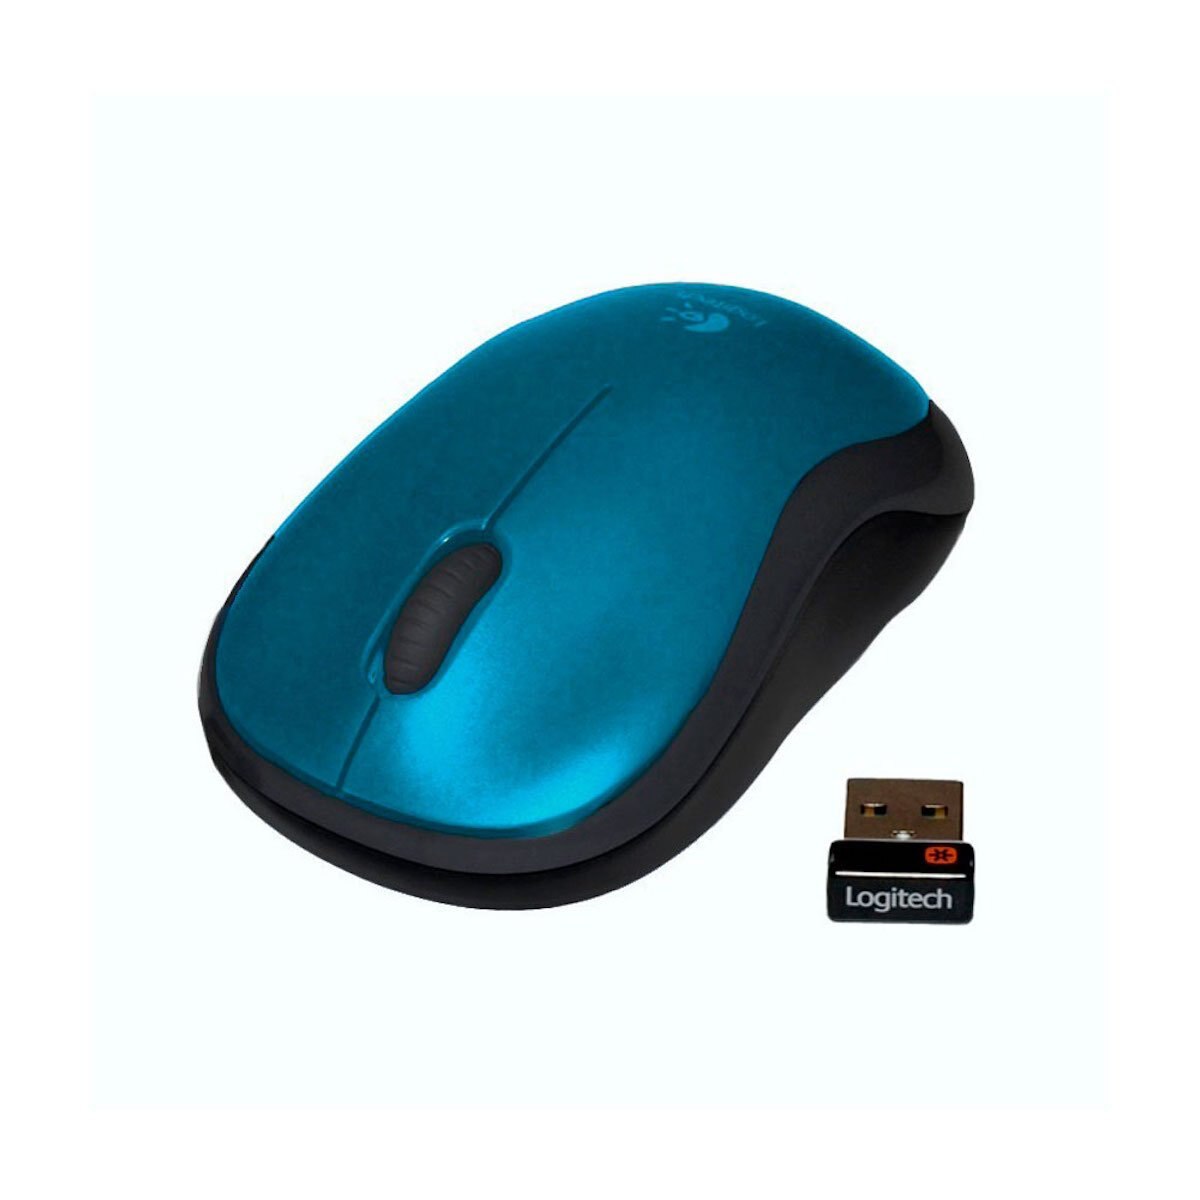 Mouse Logitech M185 Azul